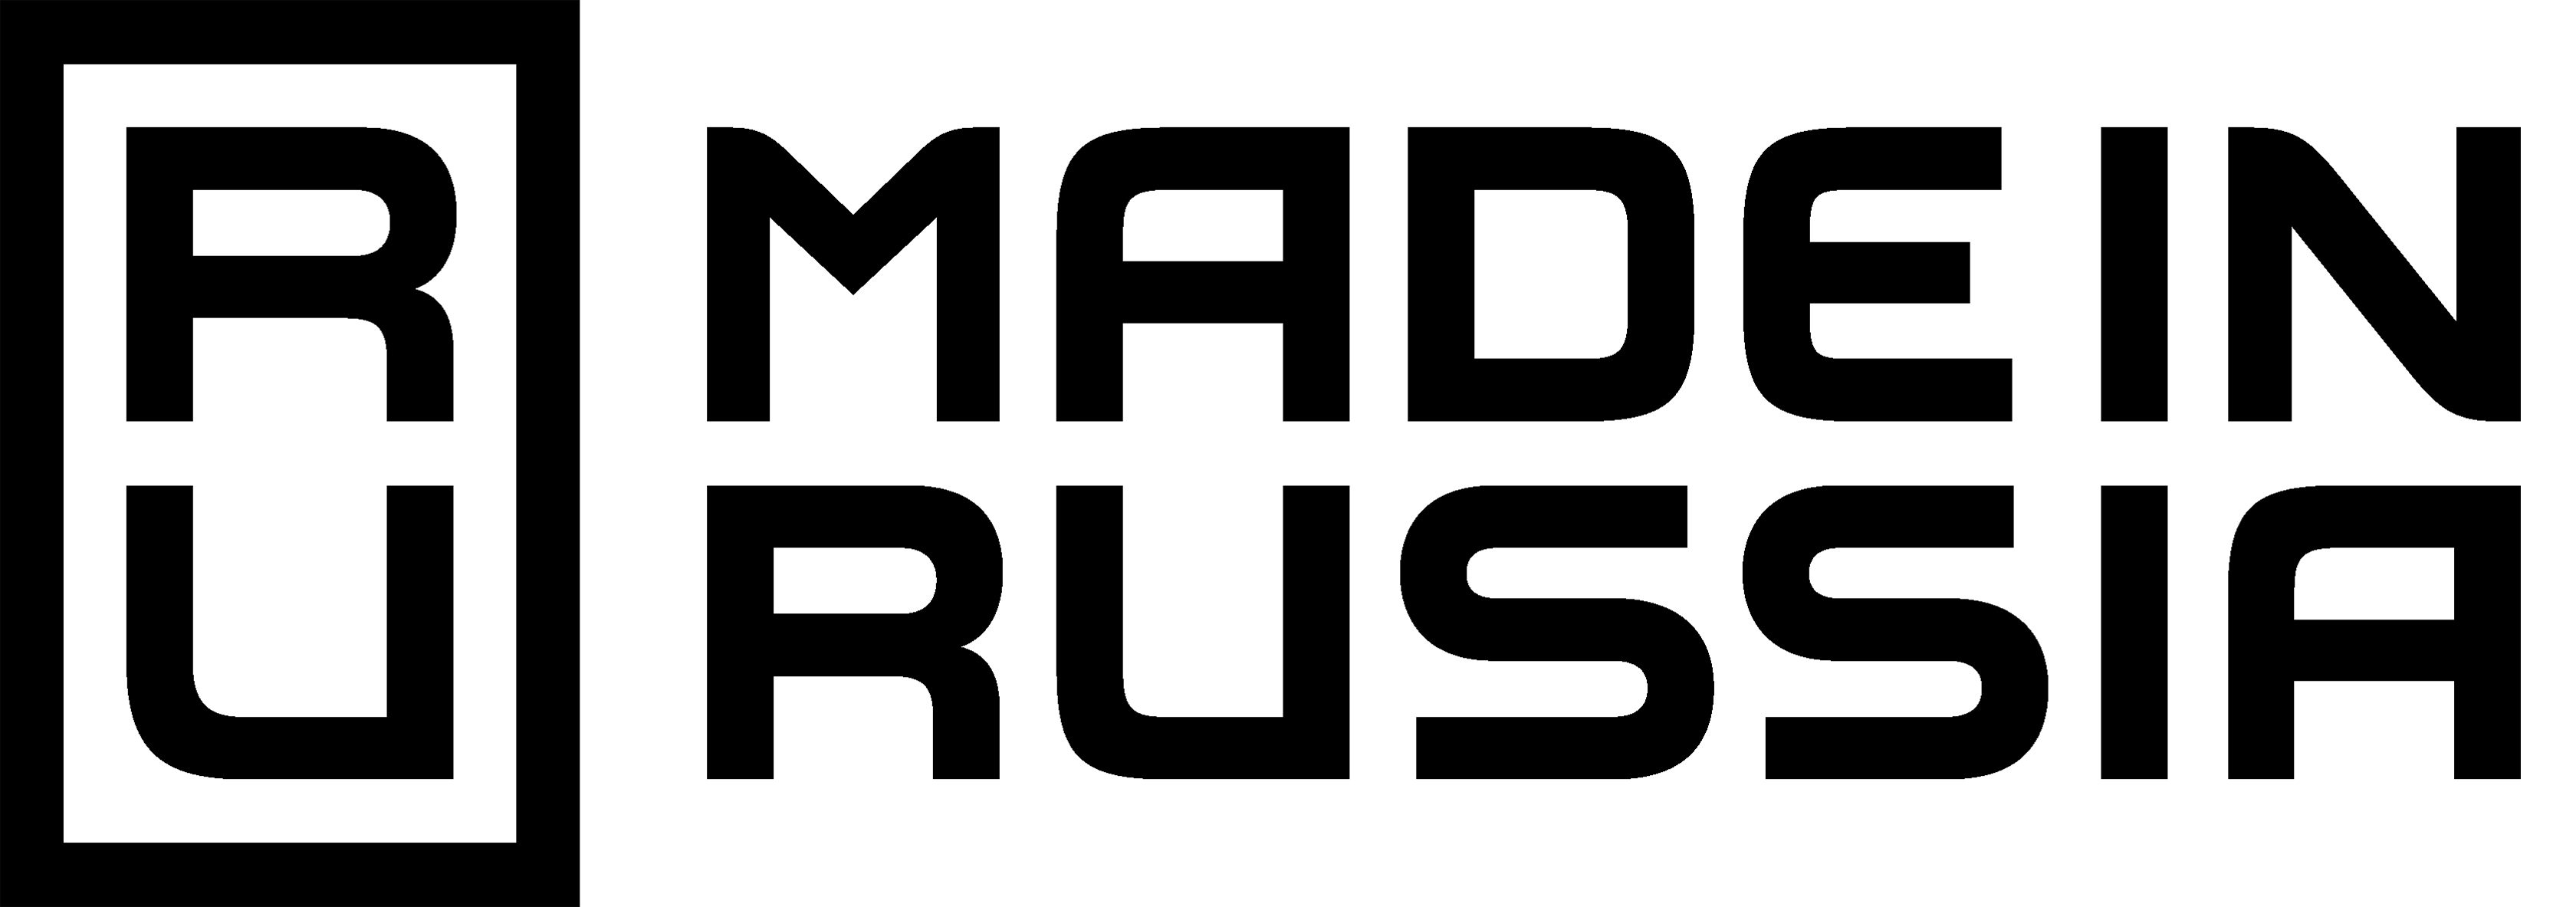 Значки артемия лебедева. Made in Russia логотип Лебедев. Сделано в России. Сделано в России знак.